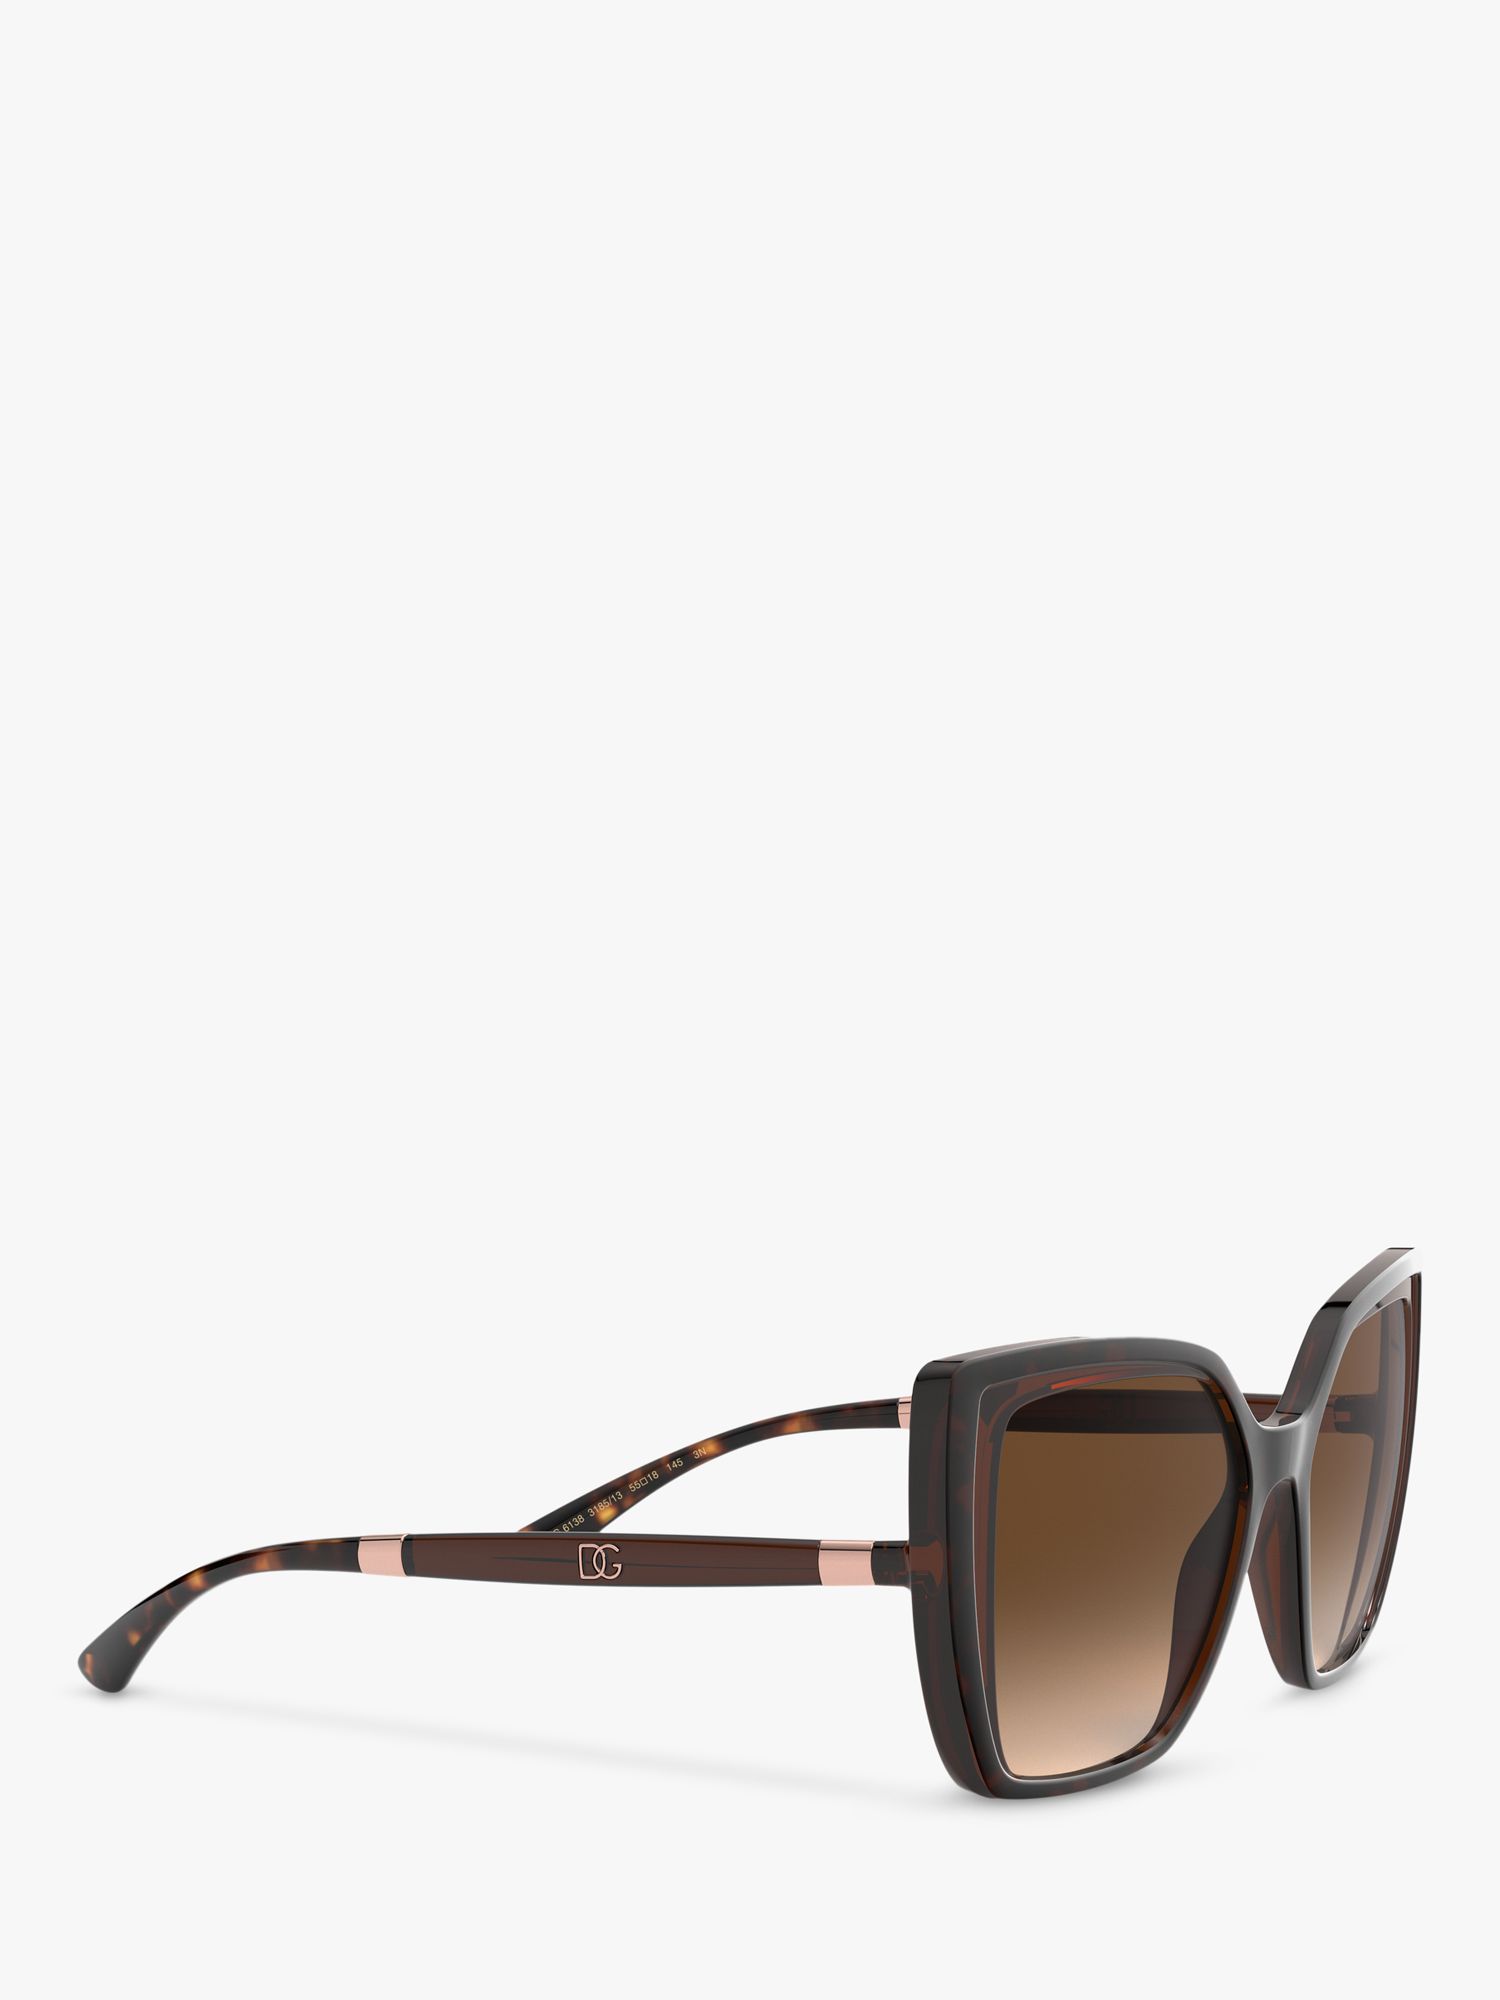 Dolce & Gabbana DG6138 Women's Butterfly Sunglasses, Brown/Brown Gradient  at John Lewis & Partners